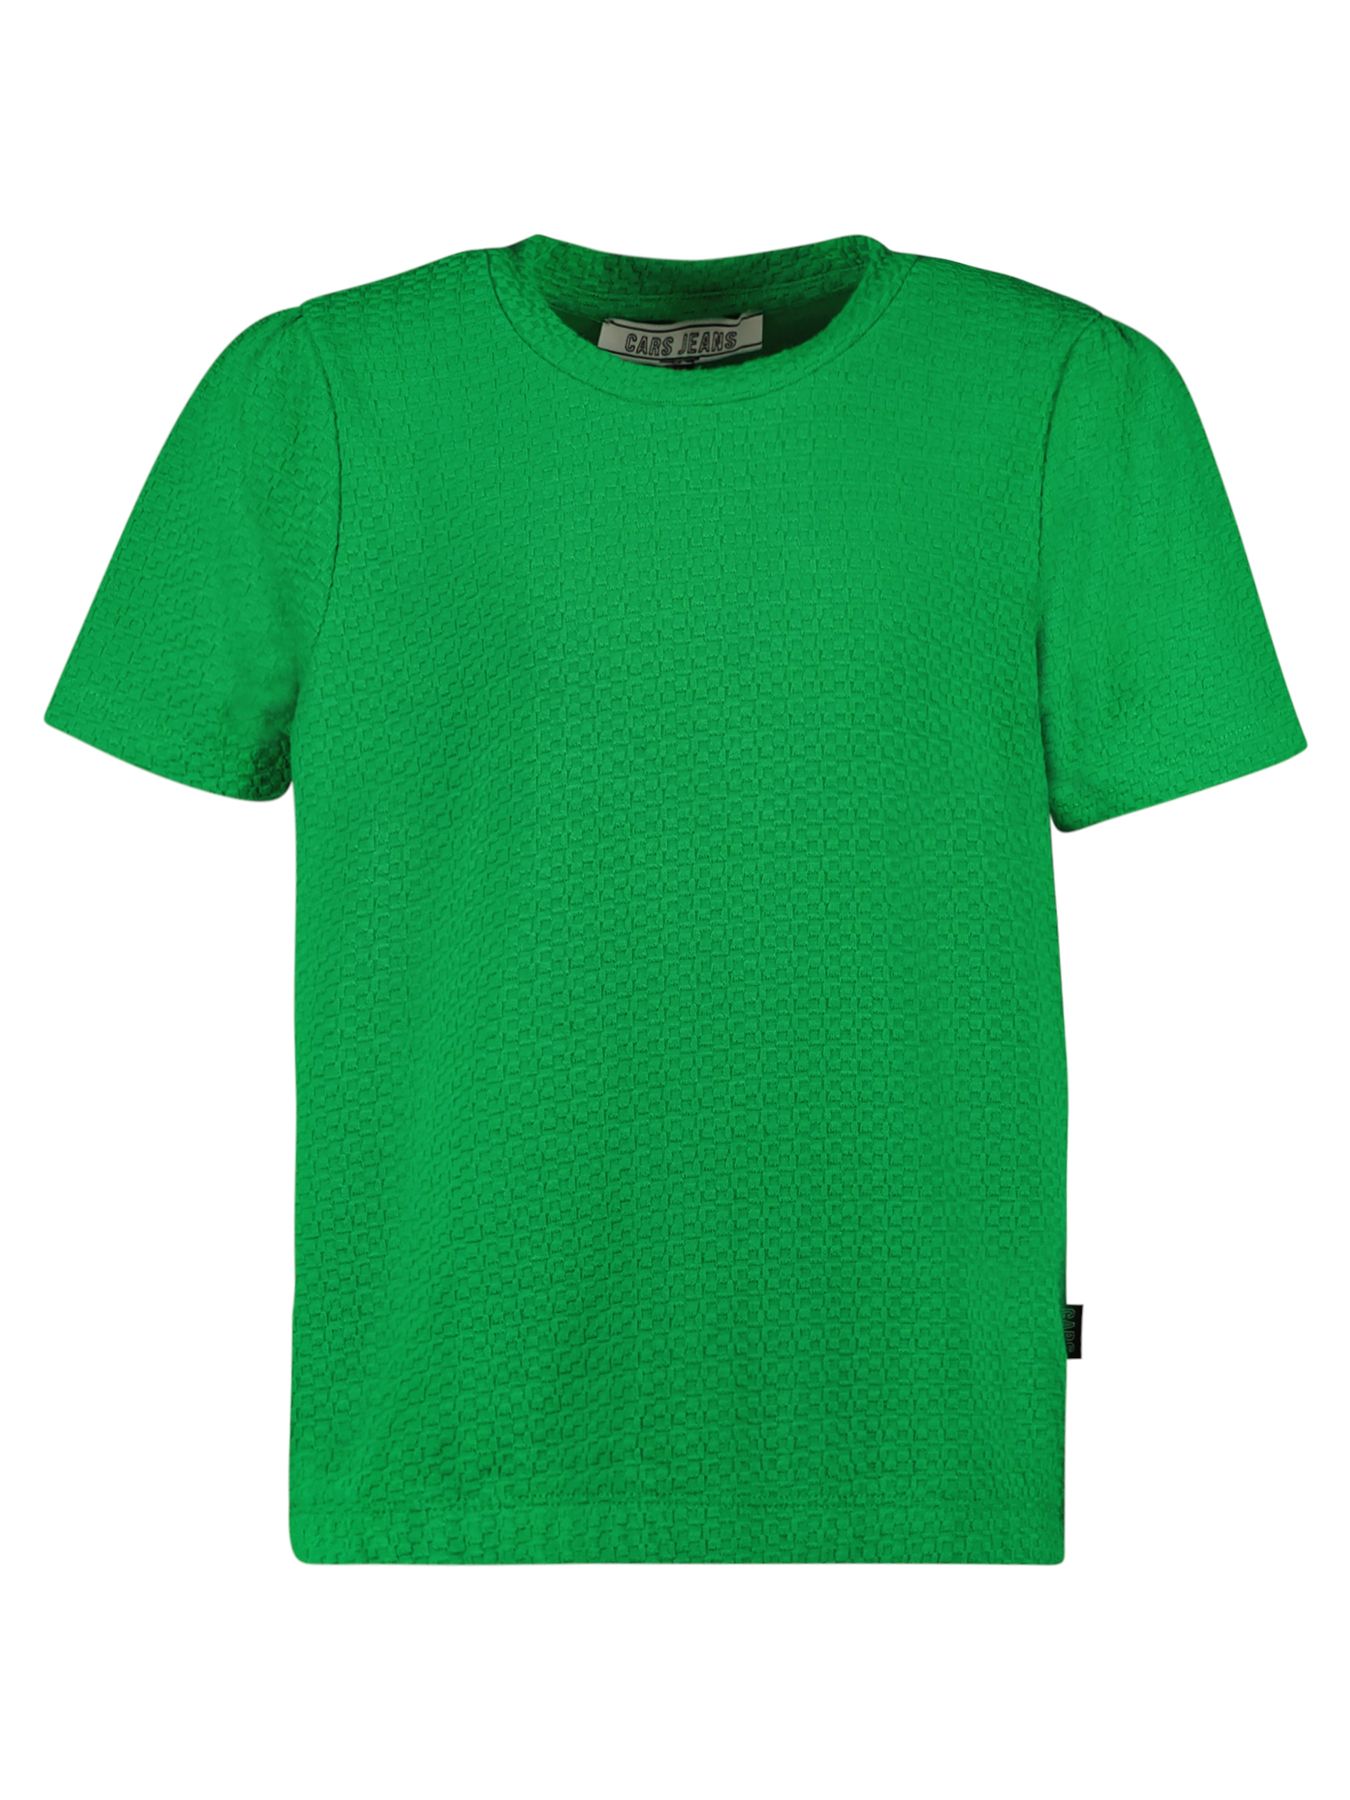 Cars jeans T-shirt Zosa Jr. 55 green 00107511-EKA03000200000033